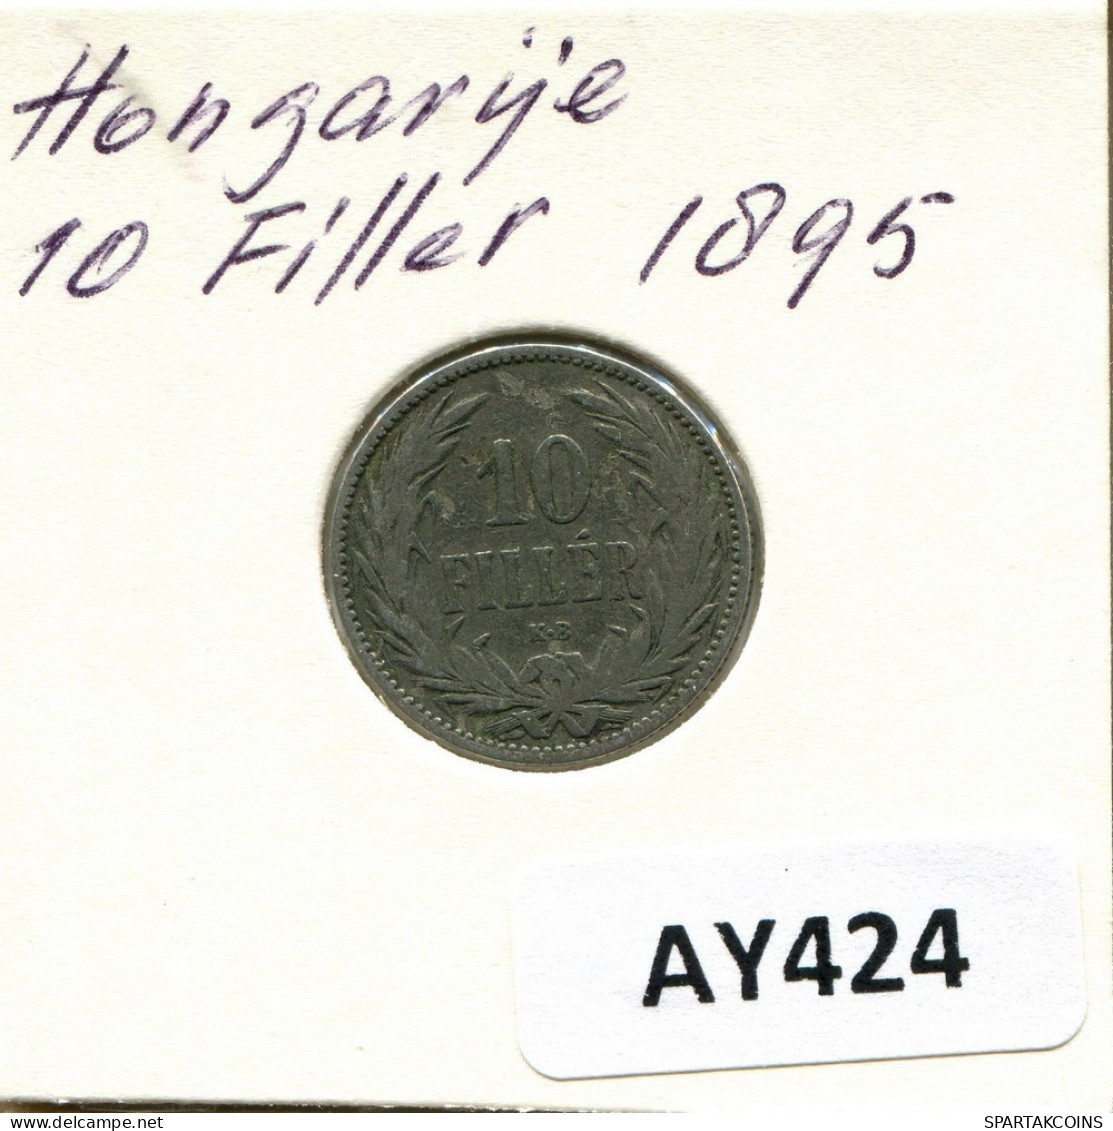 10 FILLER 1895 HONGRIE HUNGARY Pièce #AY424.F.A - Ungheria